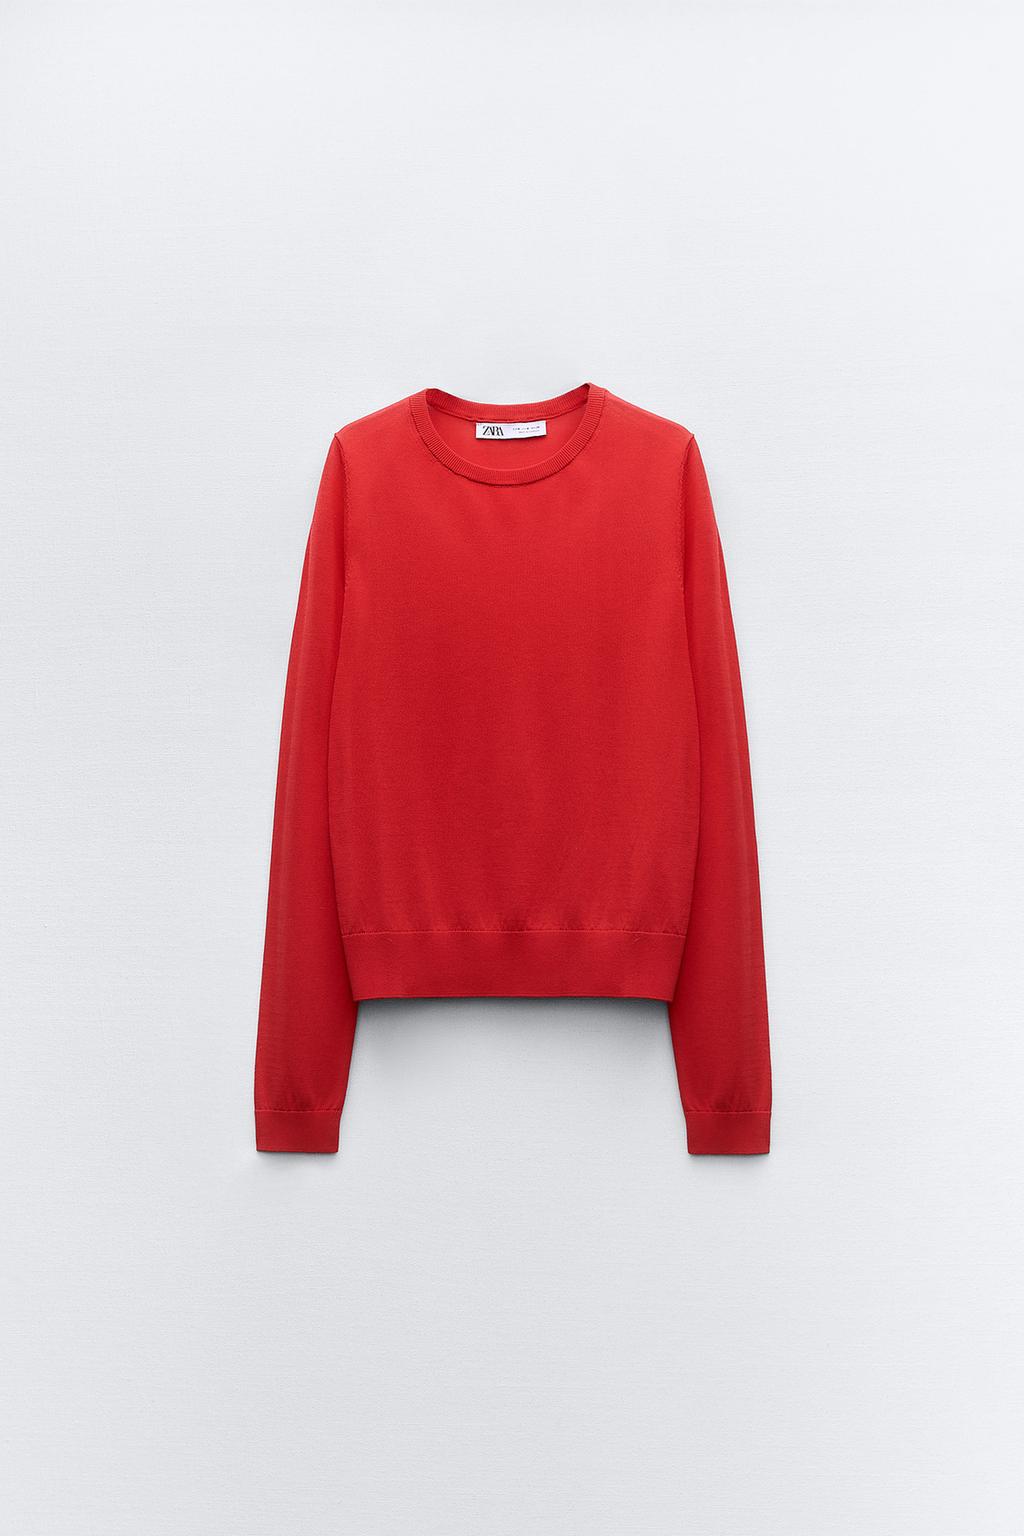 Трикотажный свитер ZARA, красный трикотажный укороченный свитер zara белый